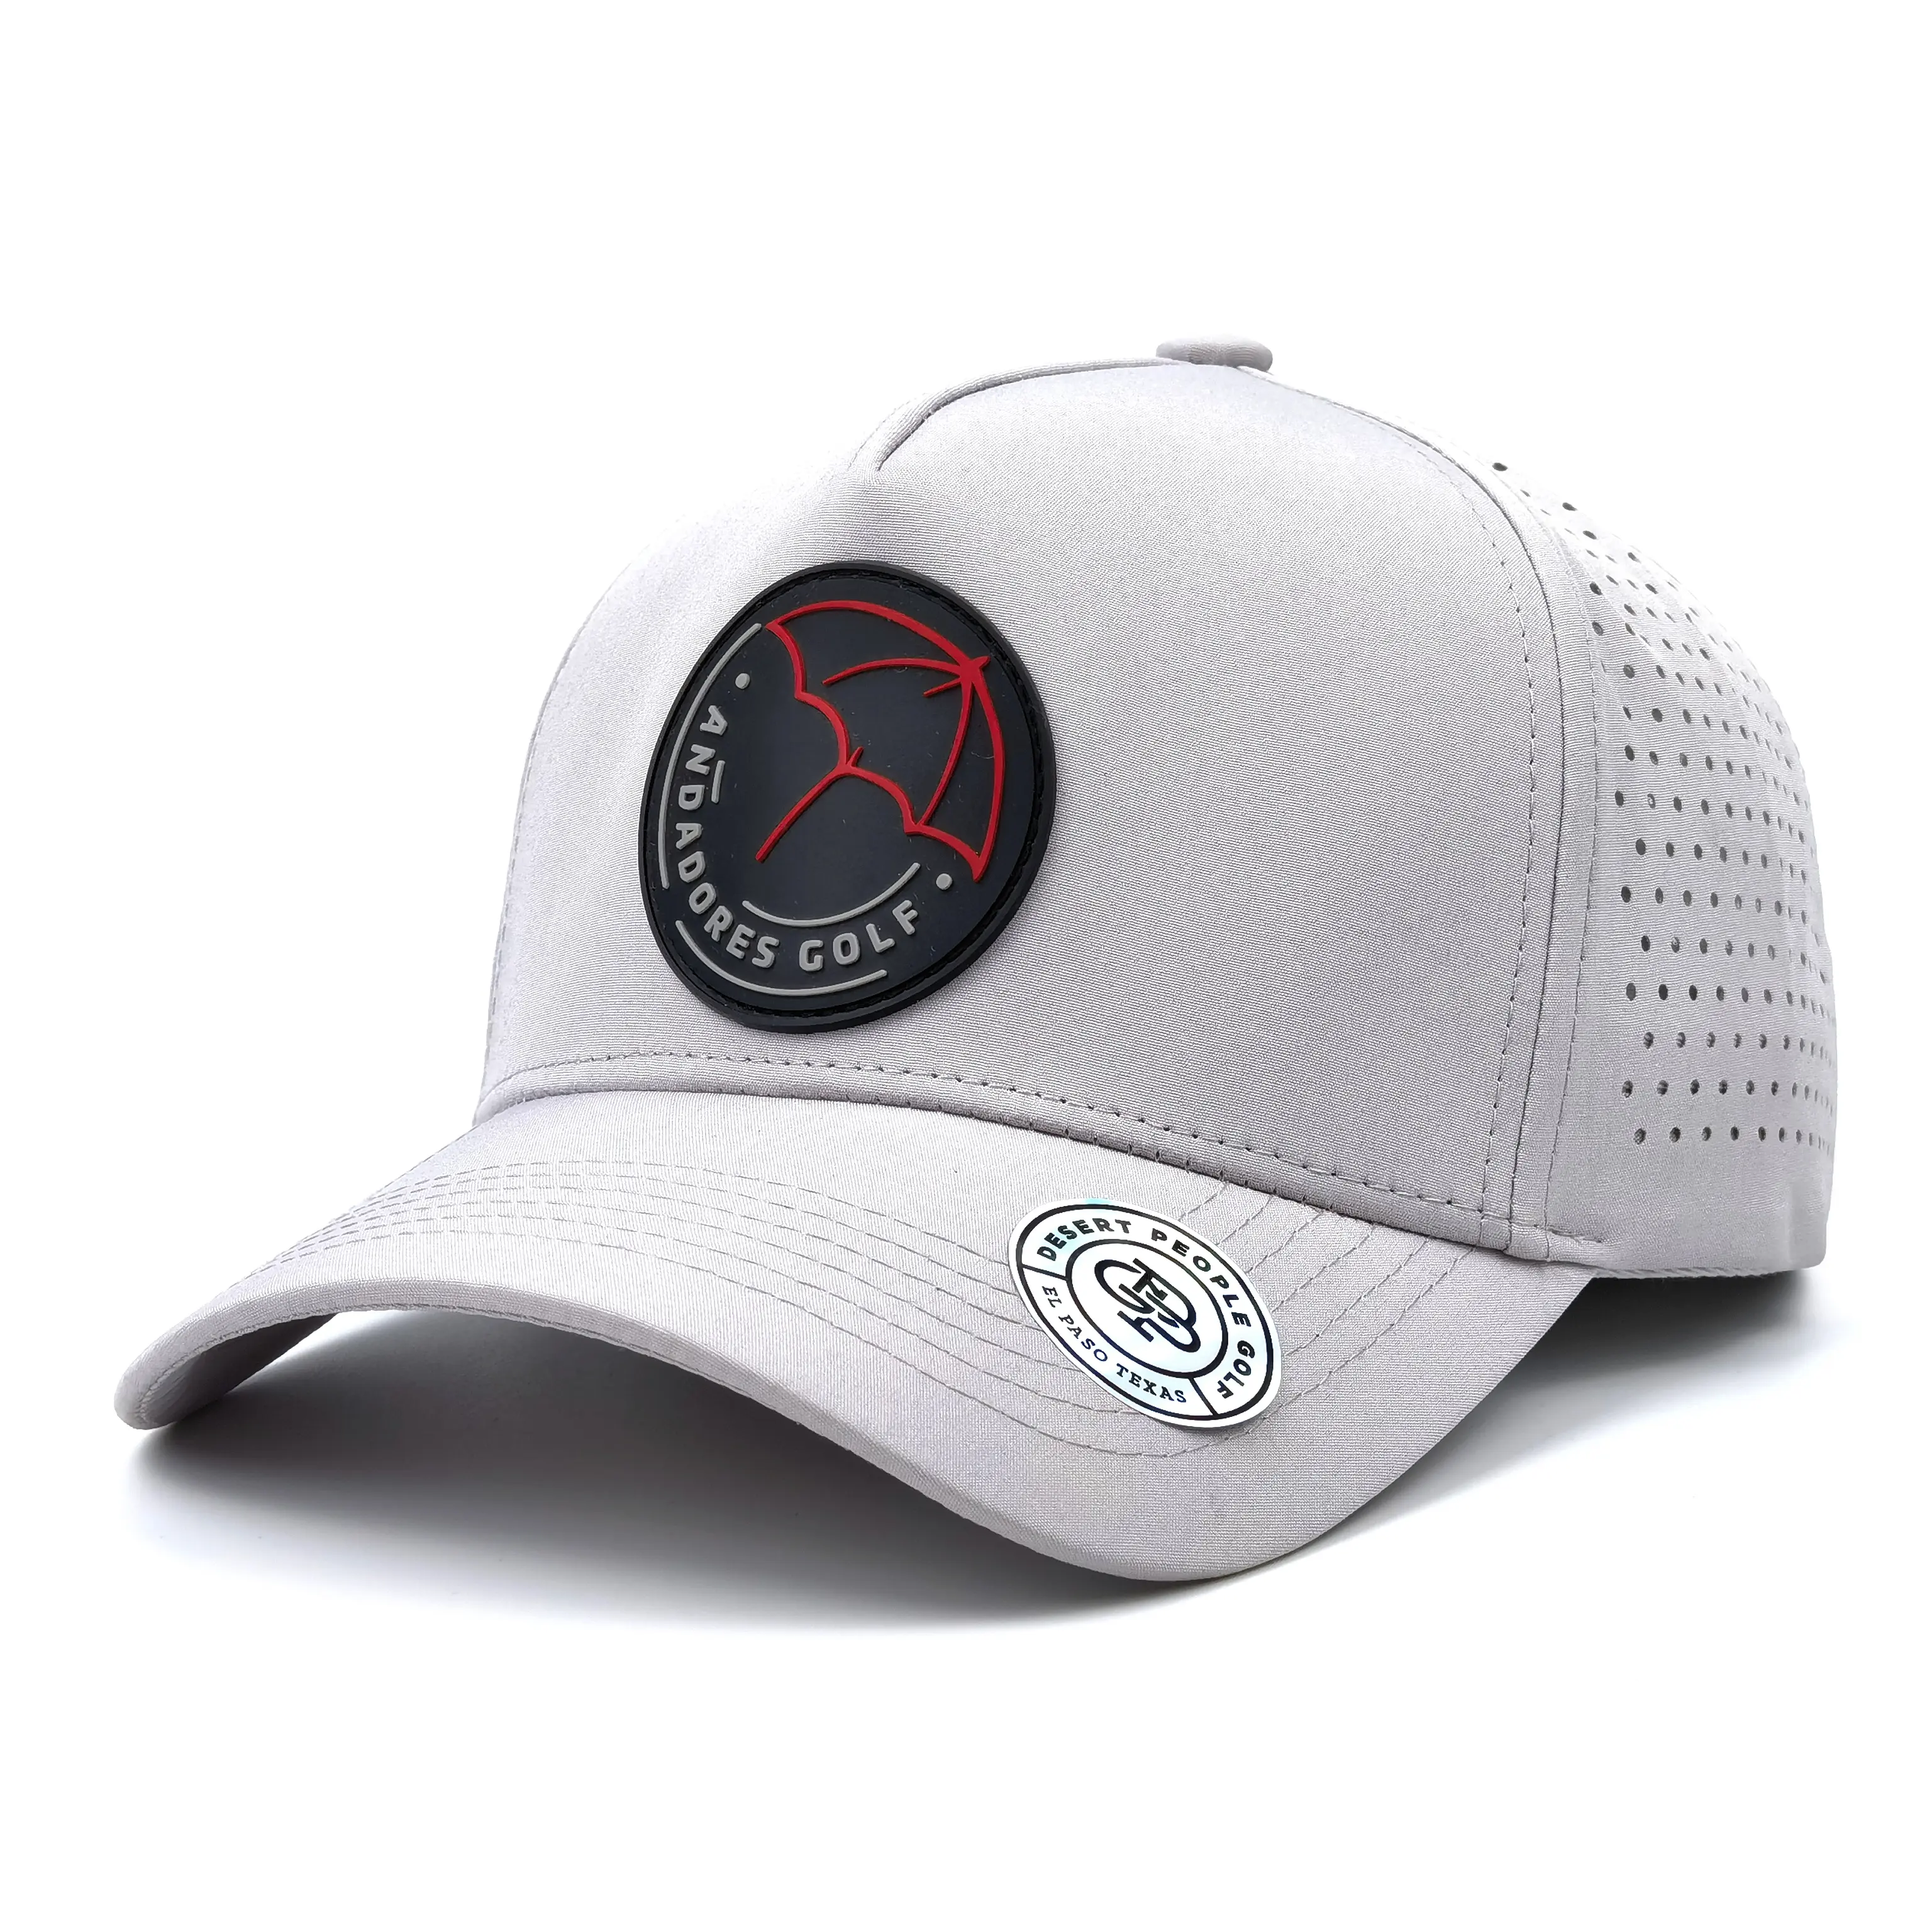 Custom Gorras 5 Panel Rubber Pvc Patch Logo Perforated Hat Breathable Net Outdoor Sport Trucker Baseball Cap For Summer